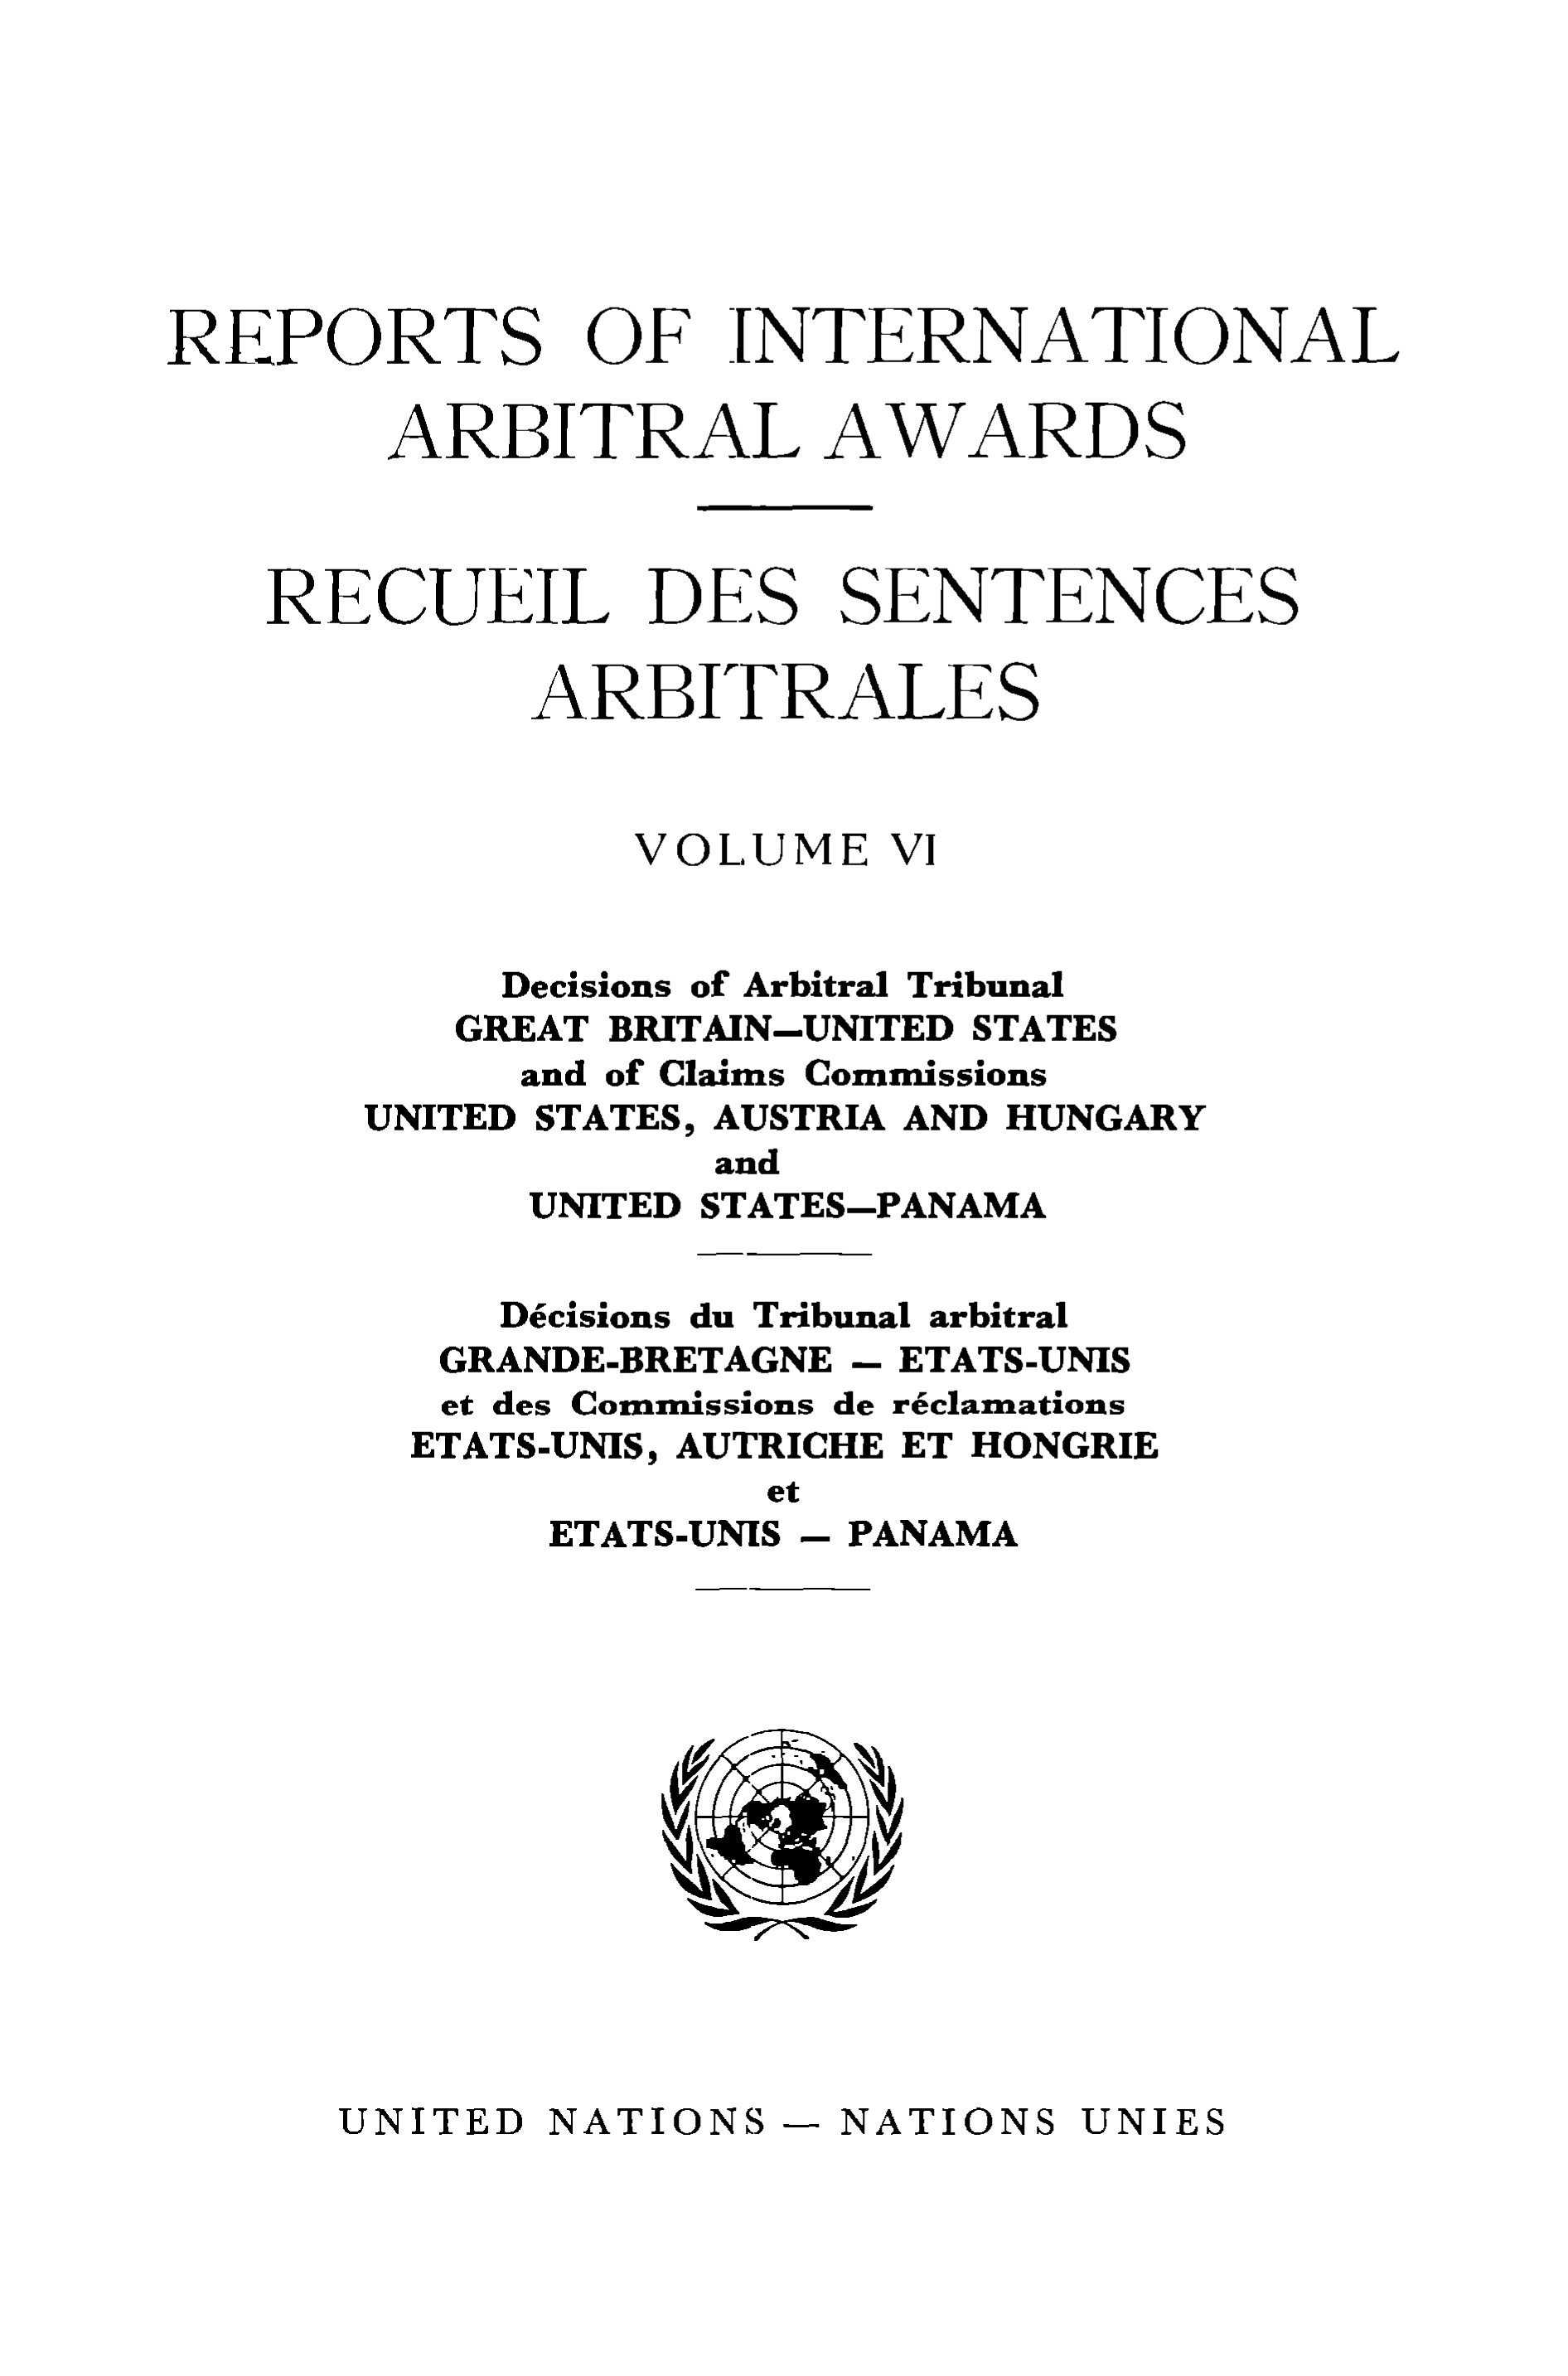 image of Reports of International Arbitral Awards, Vol. VI